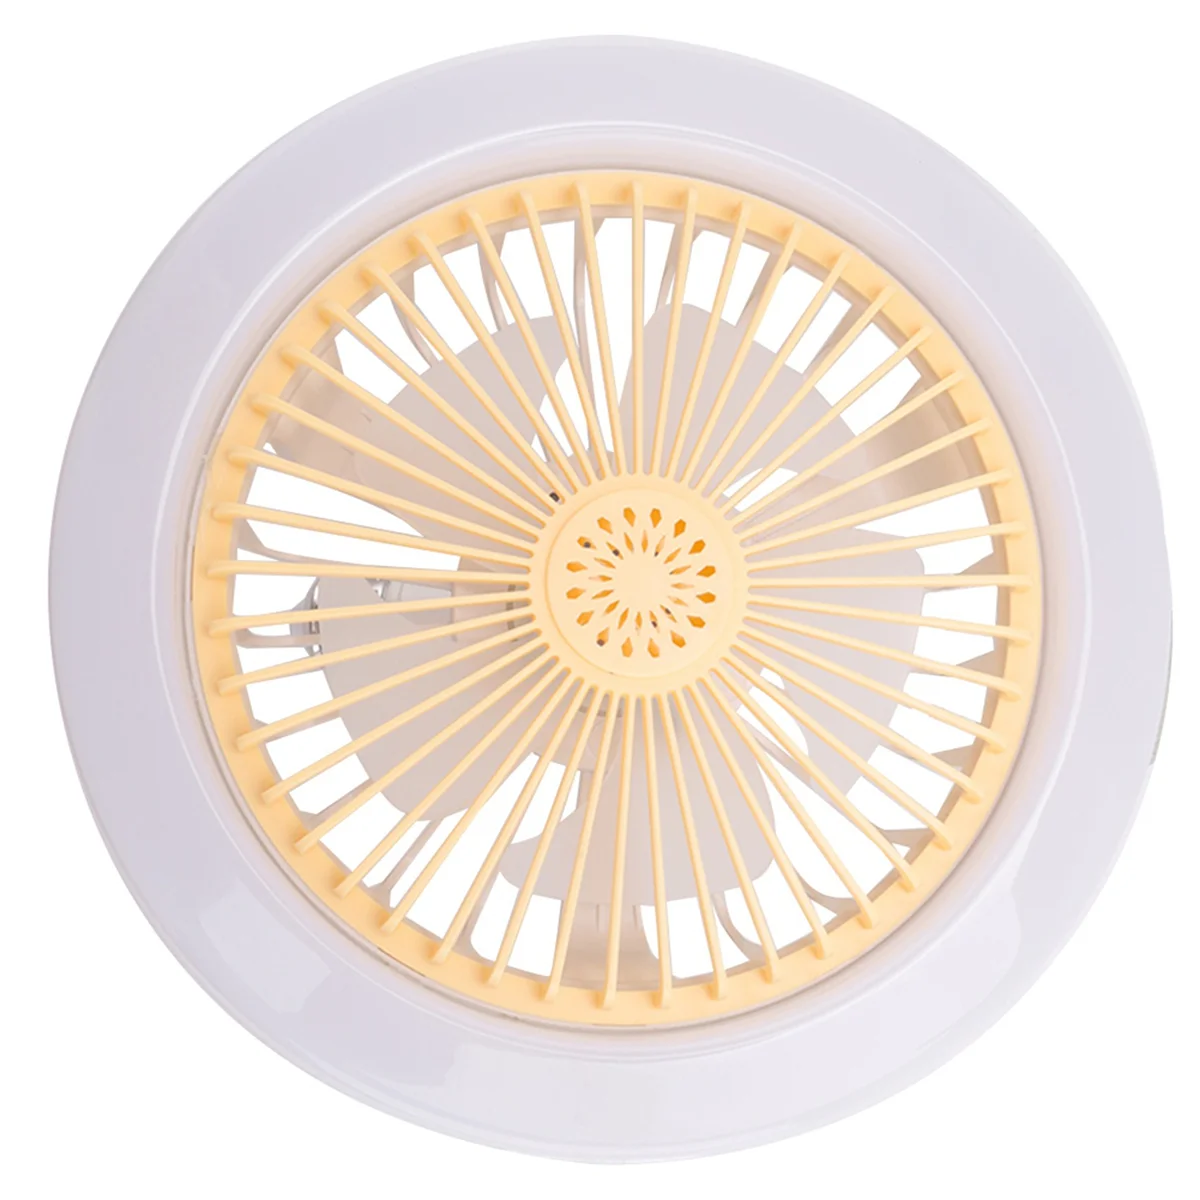 

E27 Ceiling Fan with Lights,Enclosed Low Fan Light,Hidden Electric Fan Gimbal Lamp Holder(Cream Color)